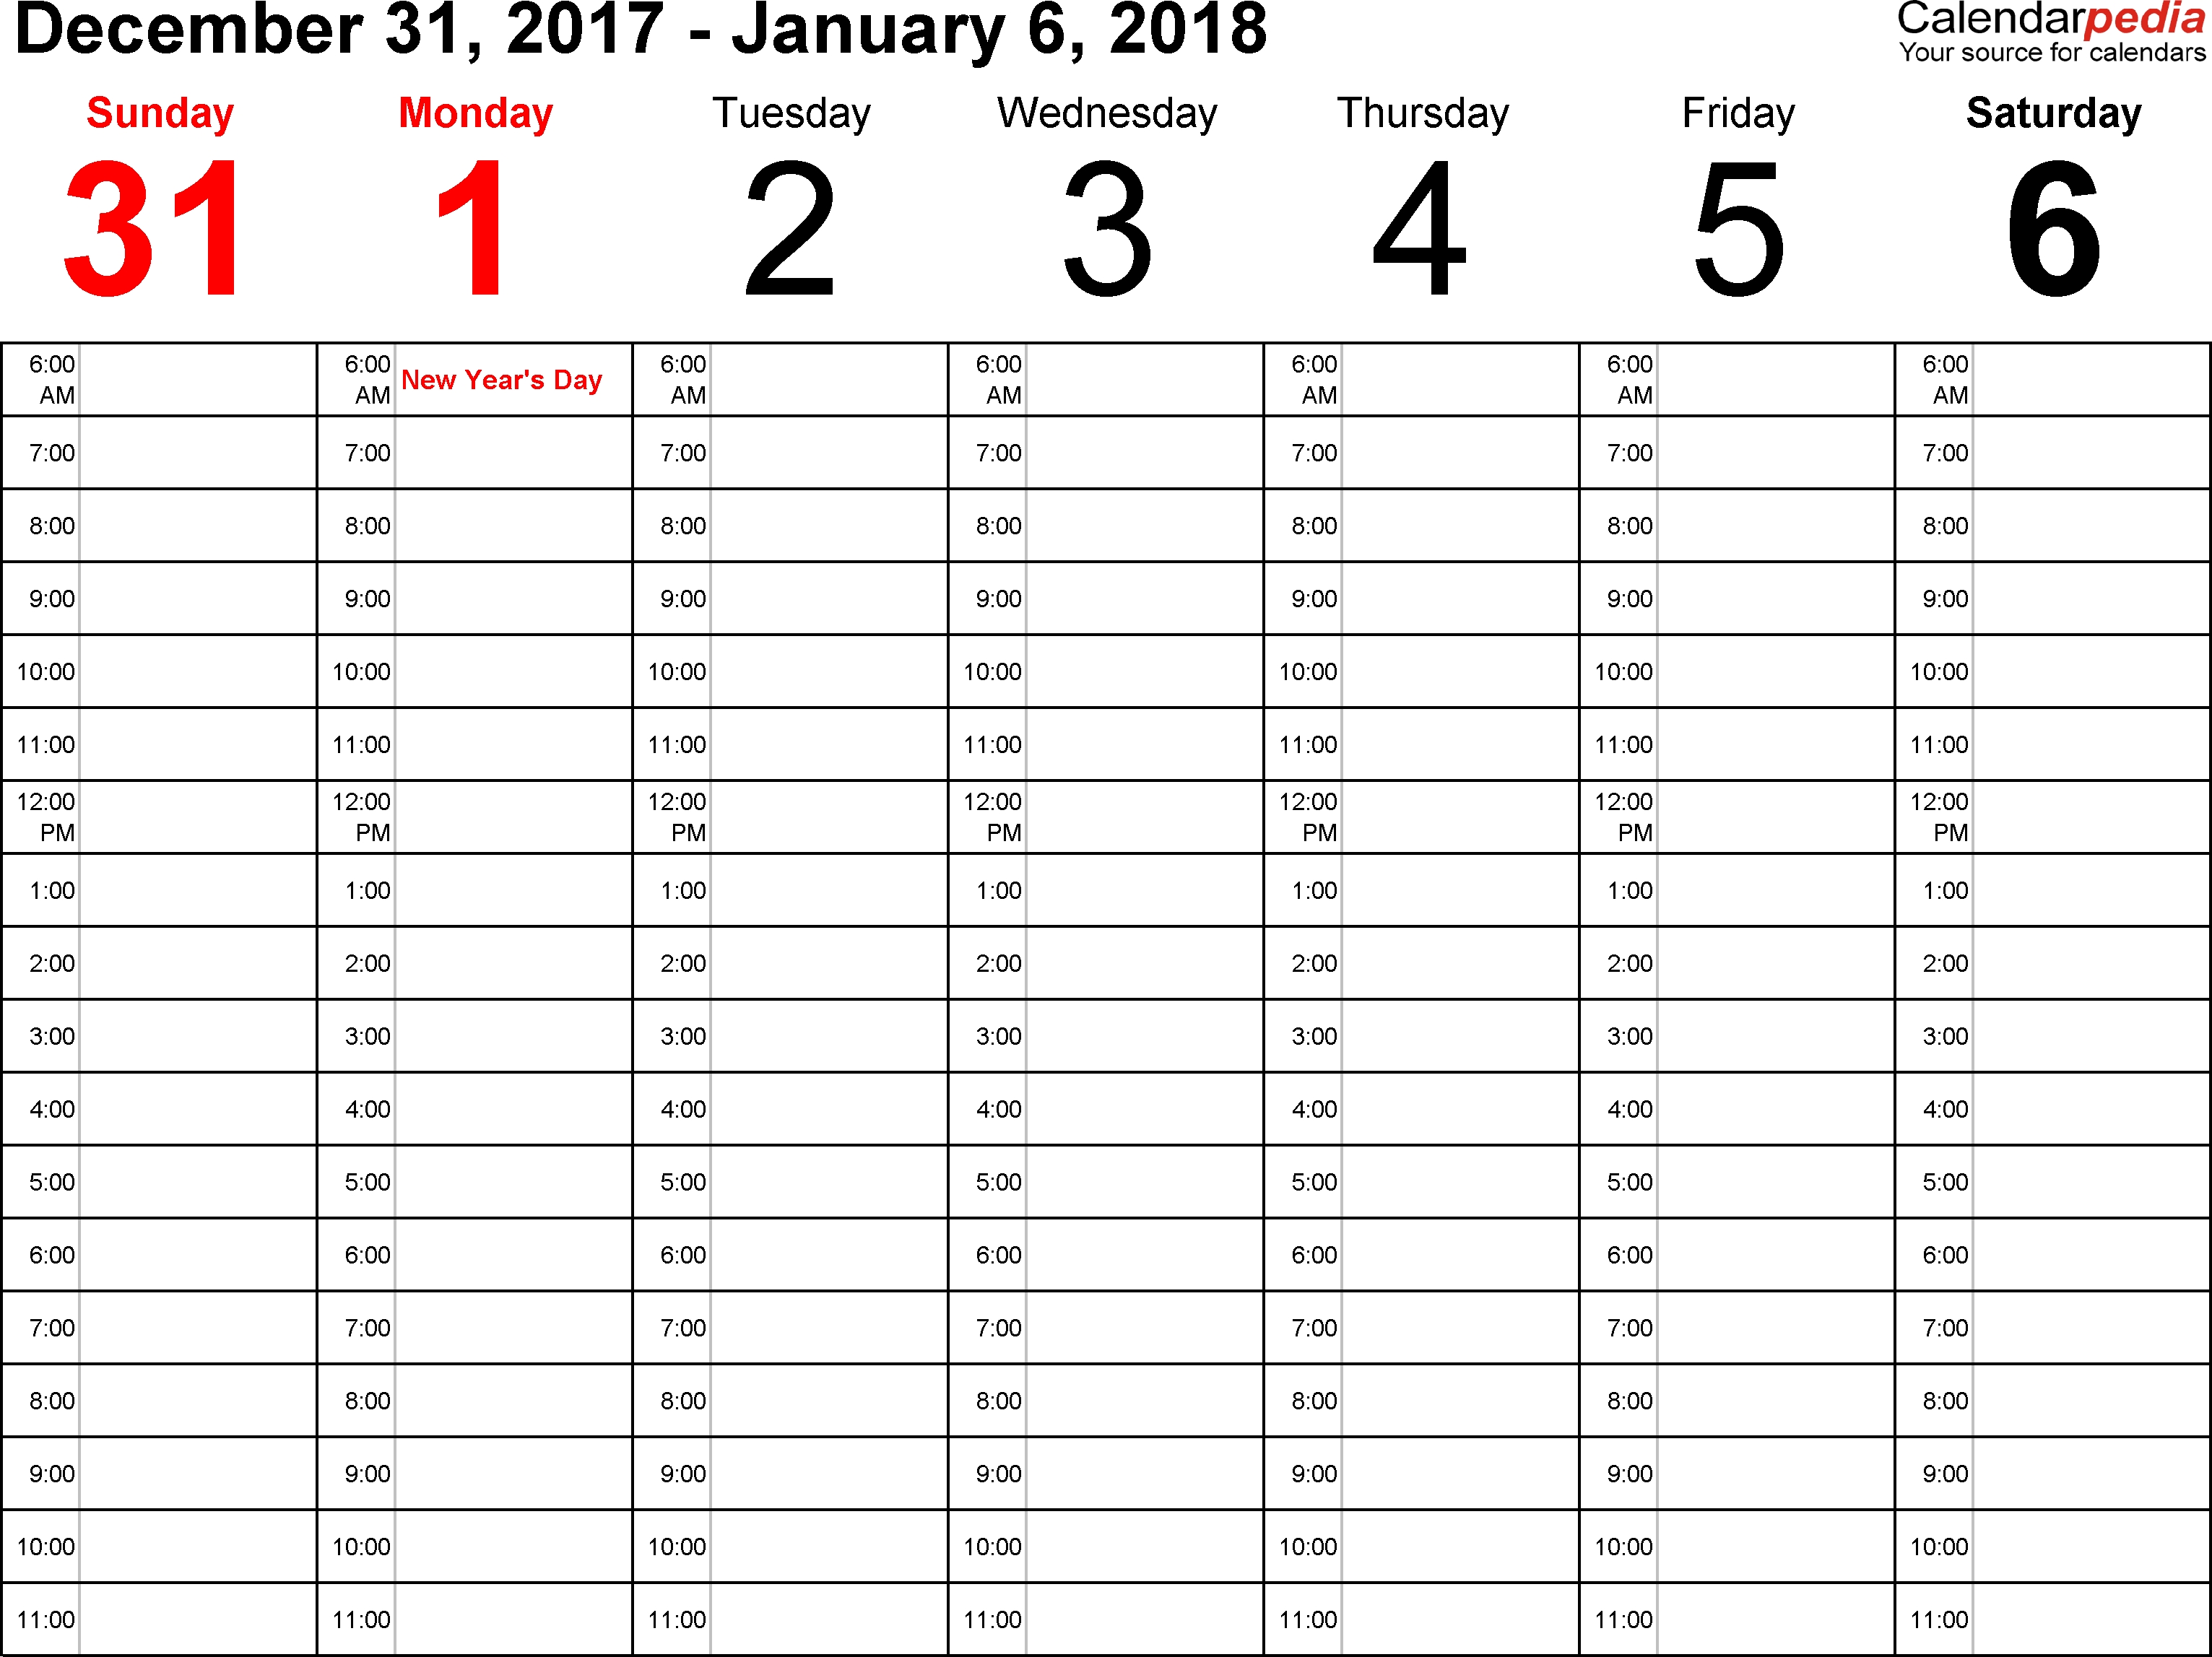 Weekly Calendar 2018 For Word - 12 Free Printable Templates within Week By Week Calendar Printable